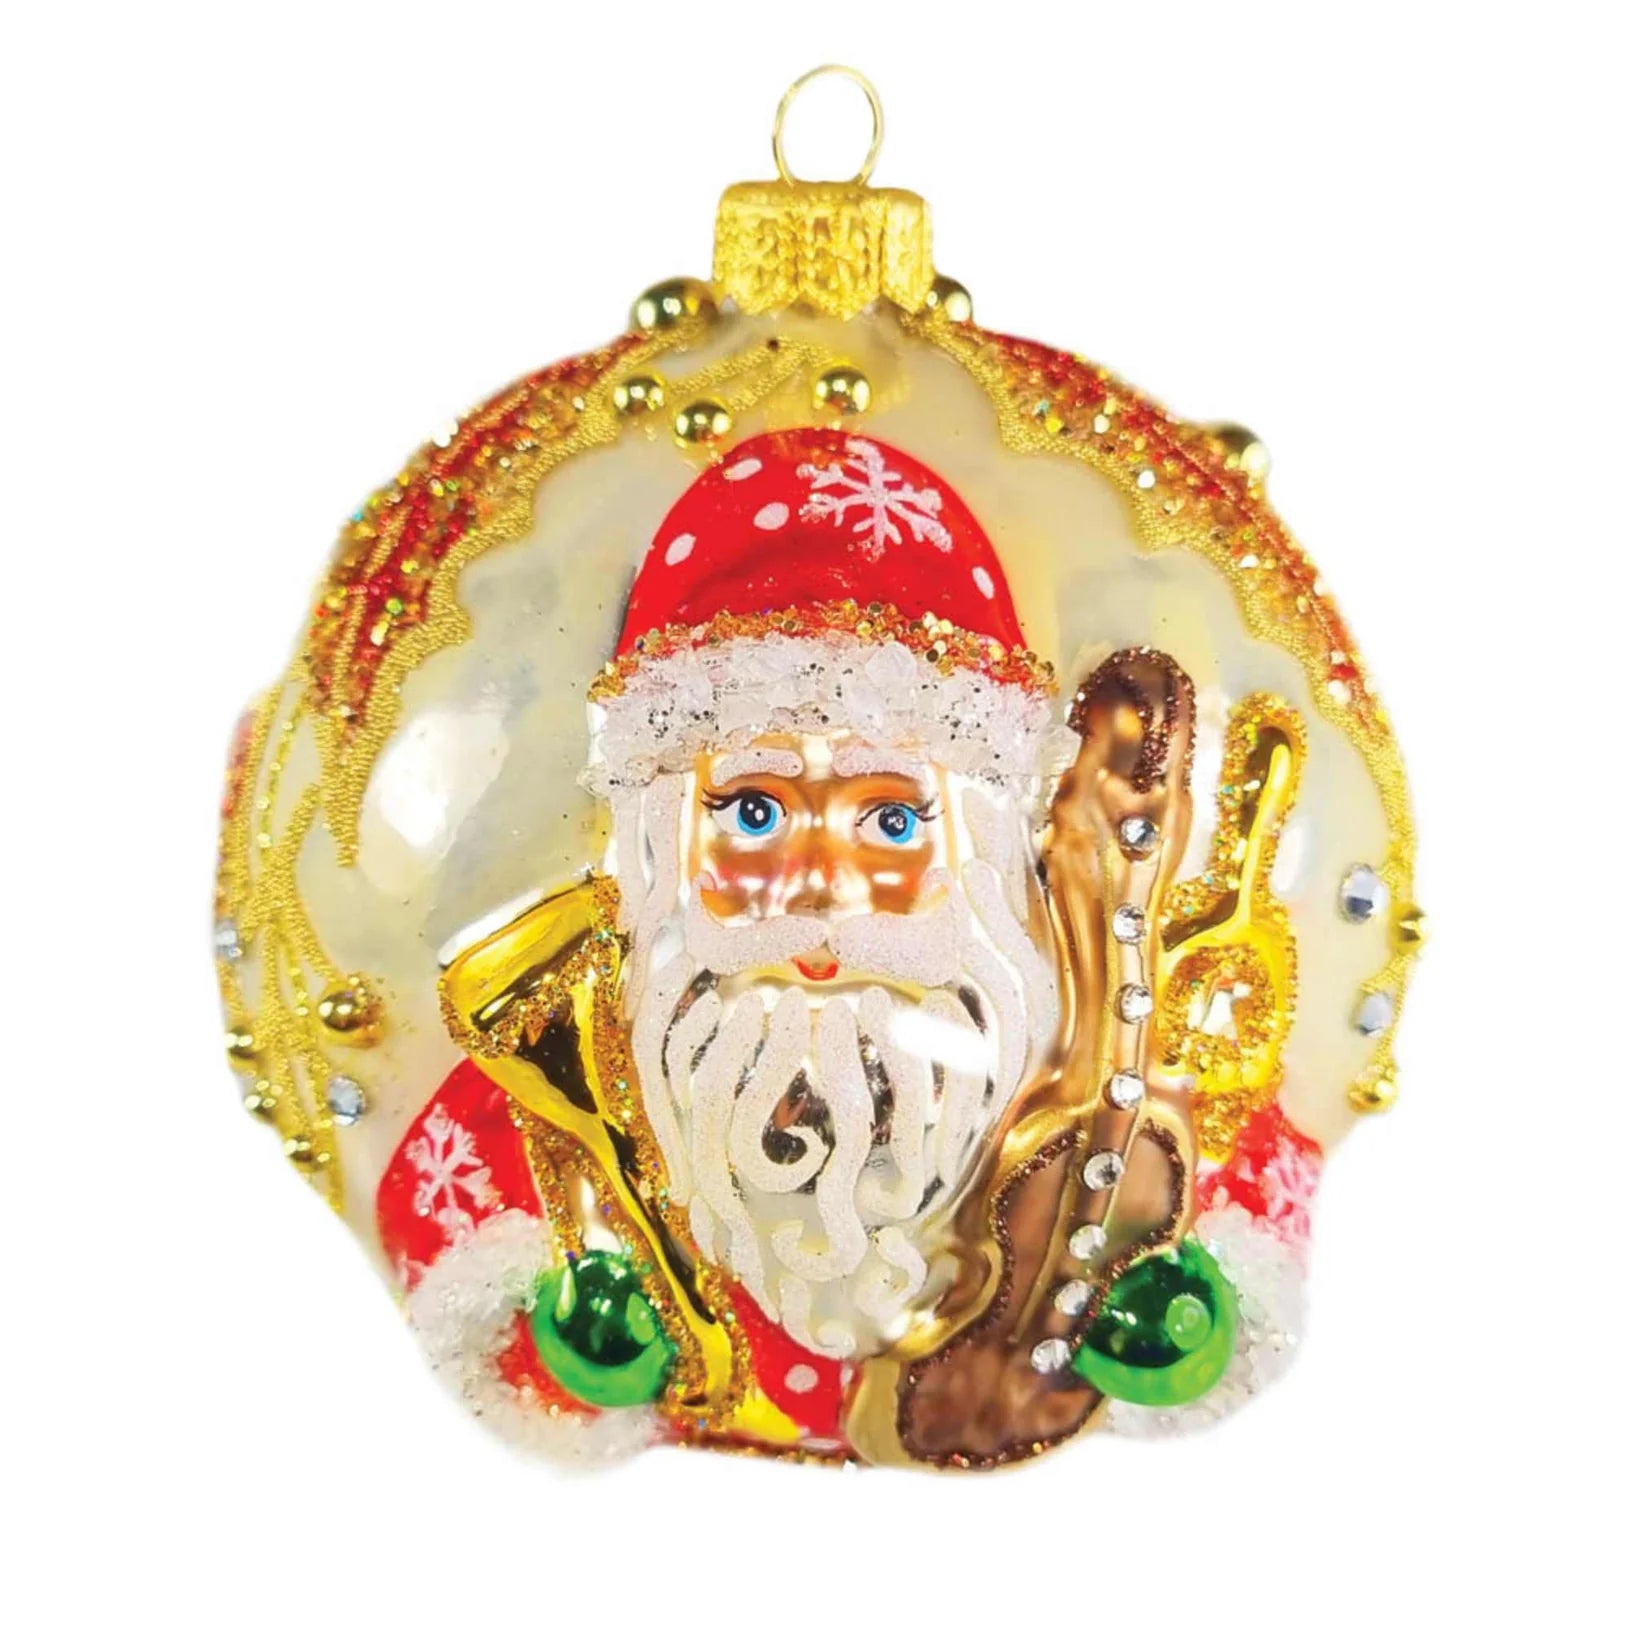 Heartfully Yours Christophe Radko Joyeaux Noel Christmas Ornament 